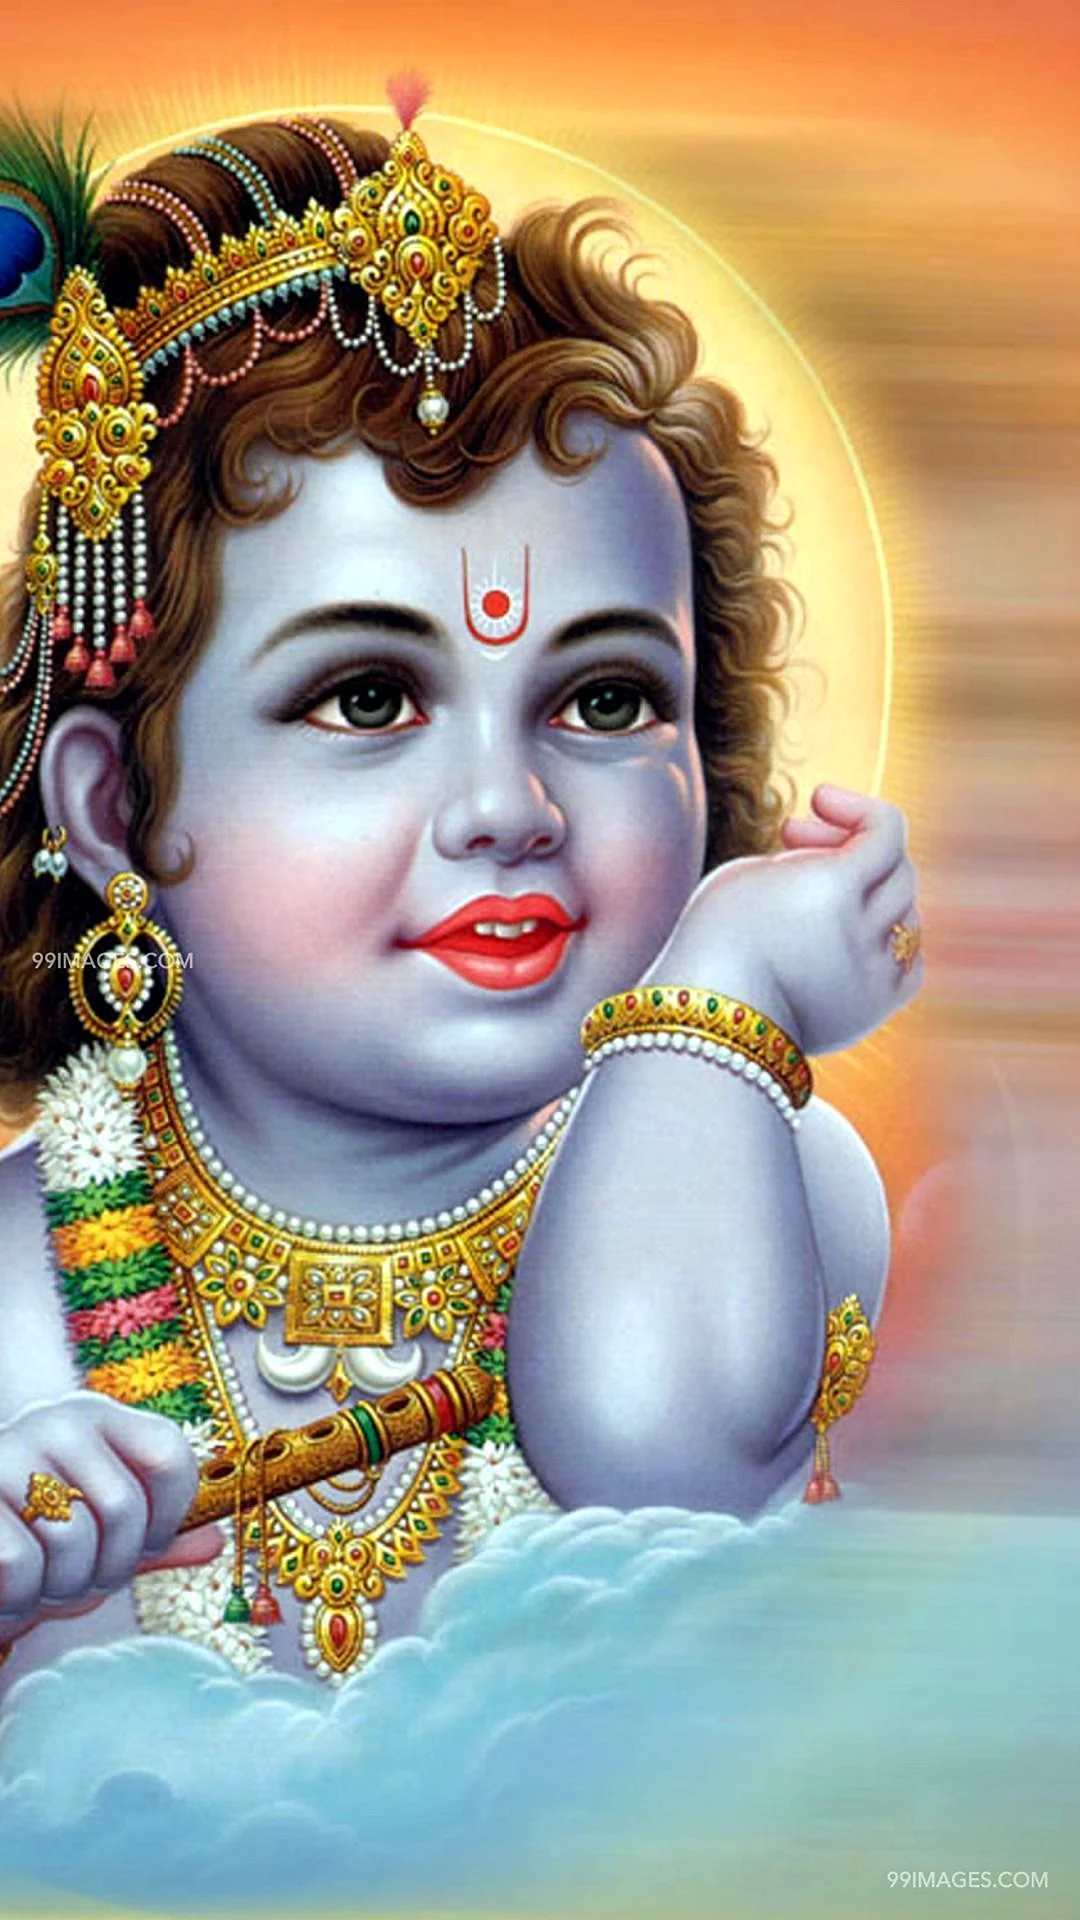 Lord Krishna Wallpaper For iPhone